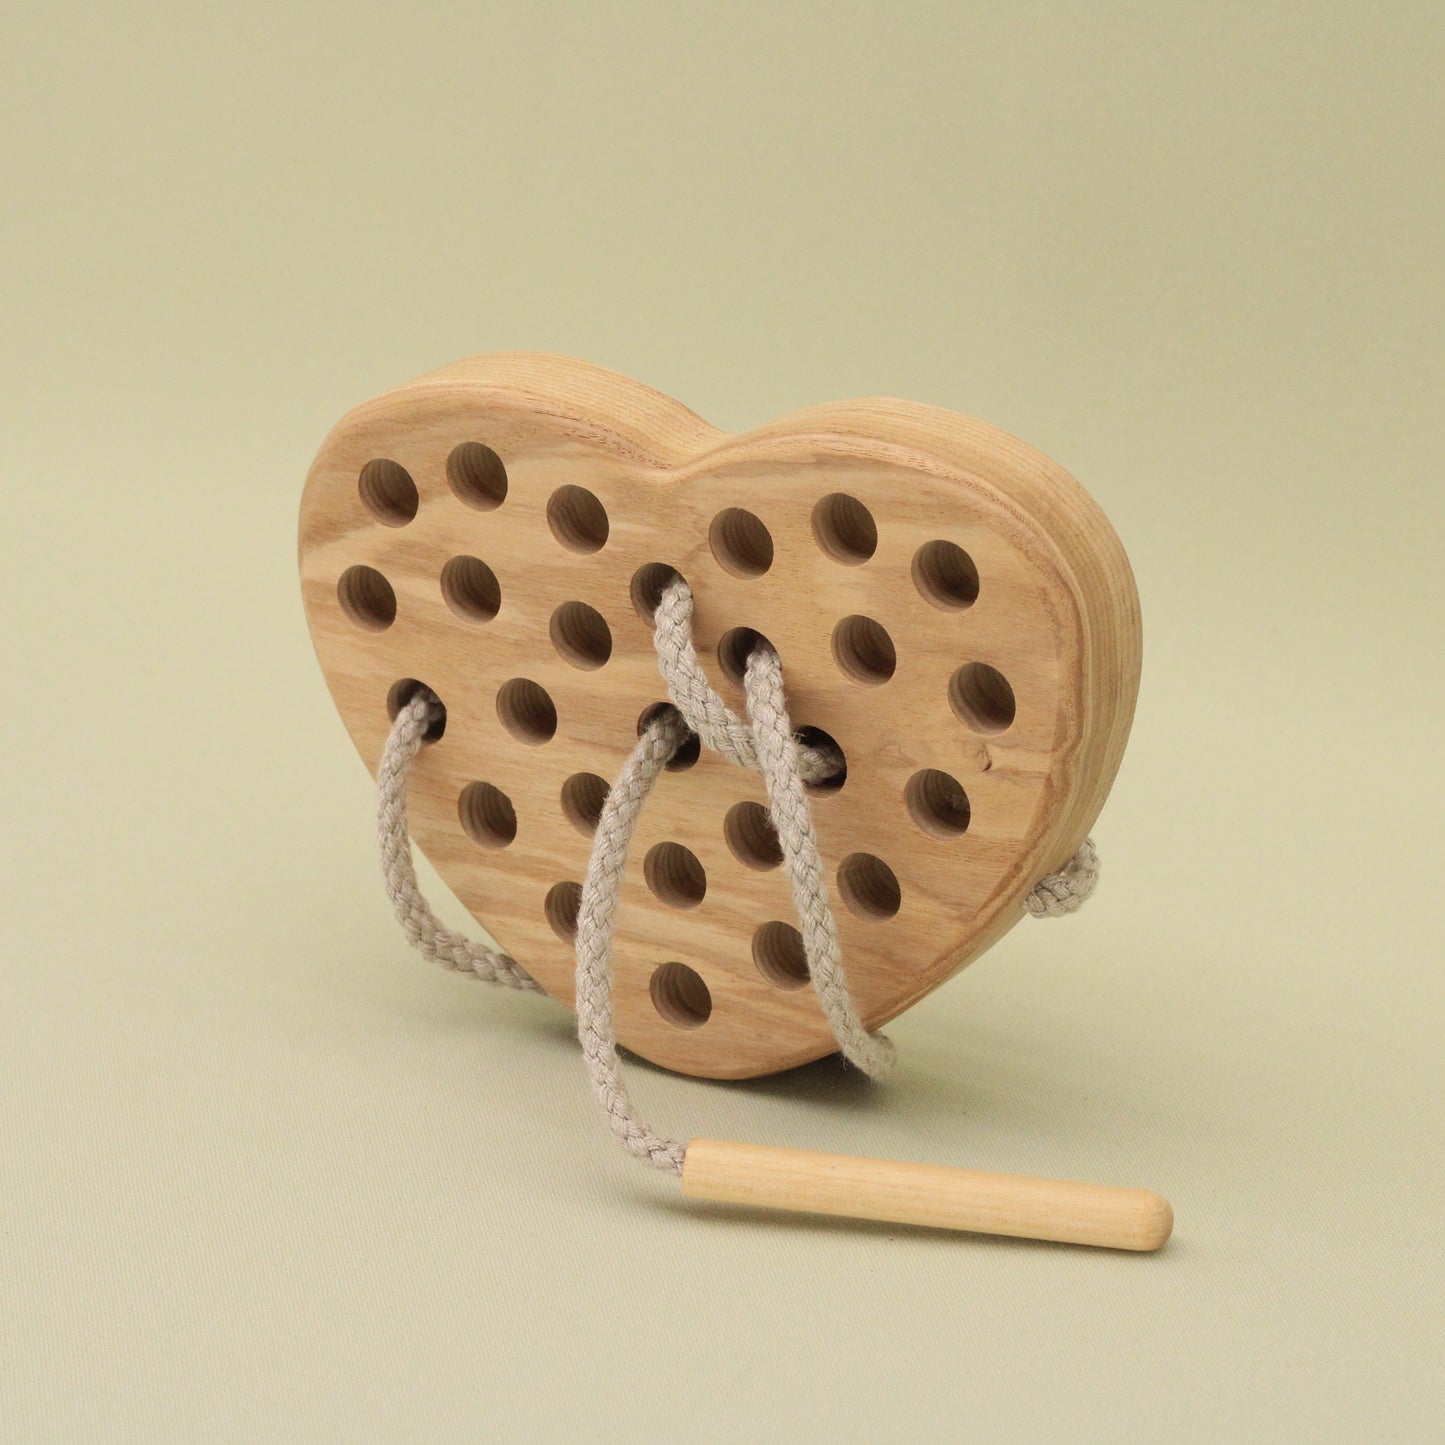 Lotes Toys Natural Wooden Threading Lacing Heart TT20